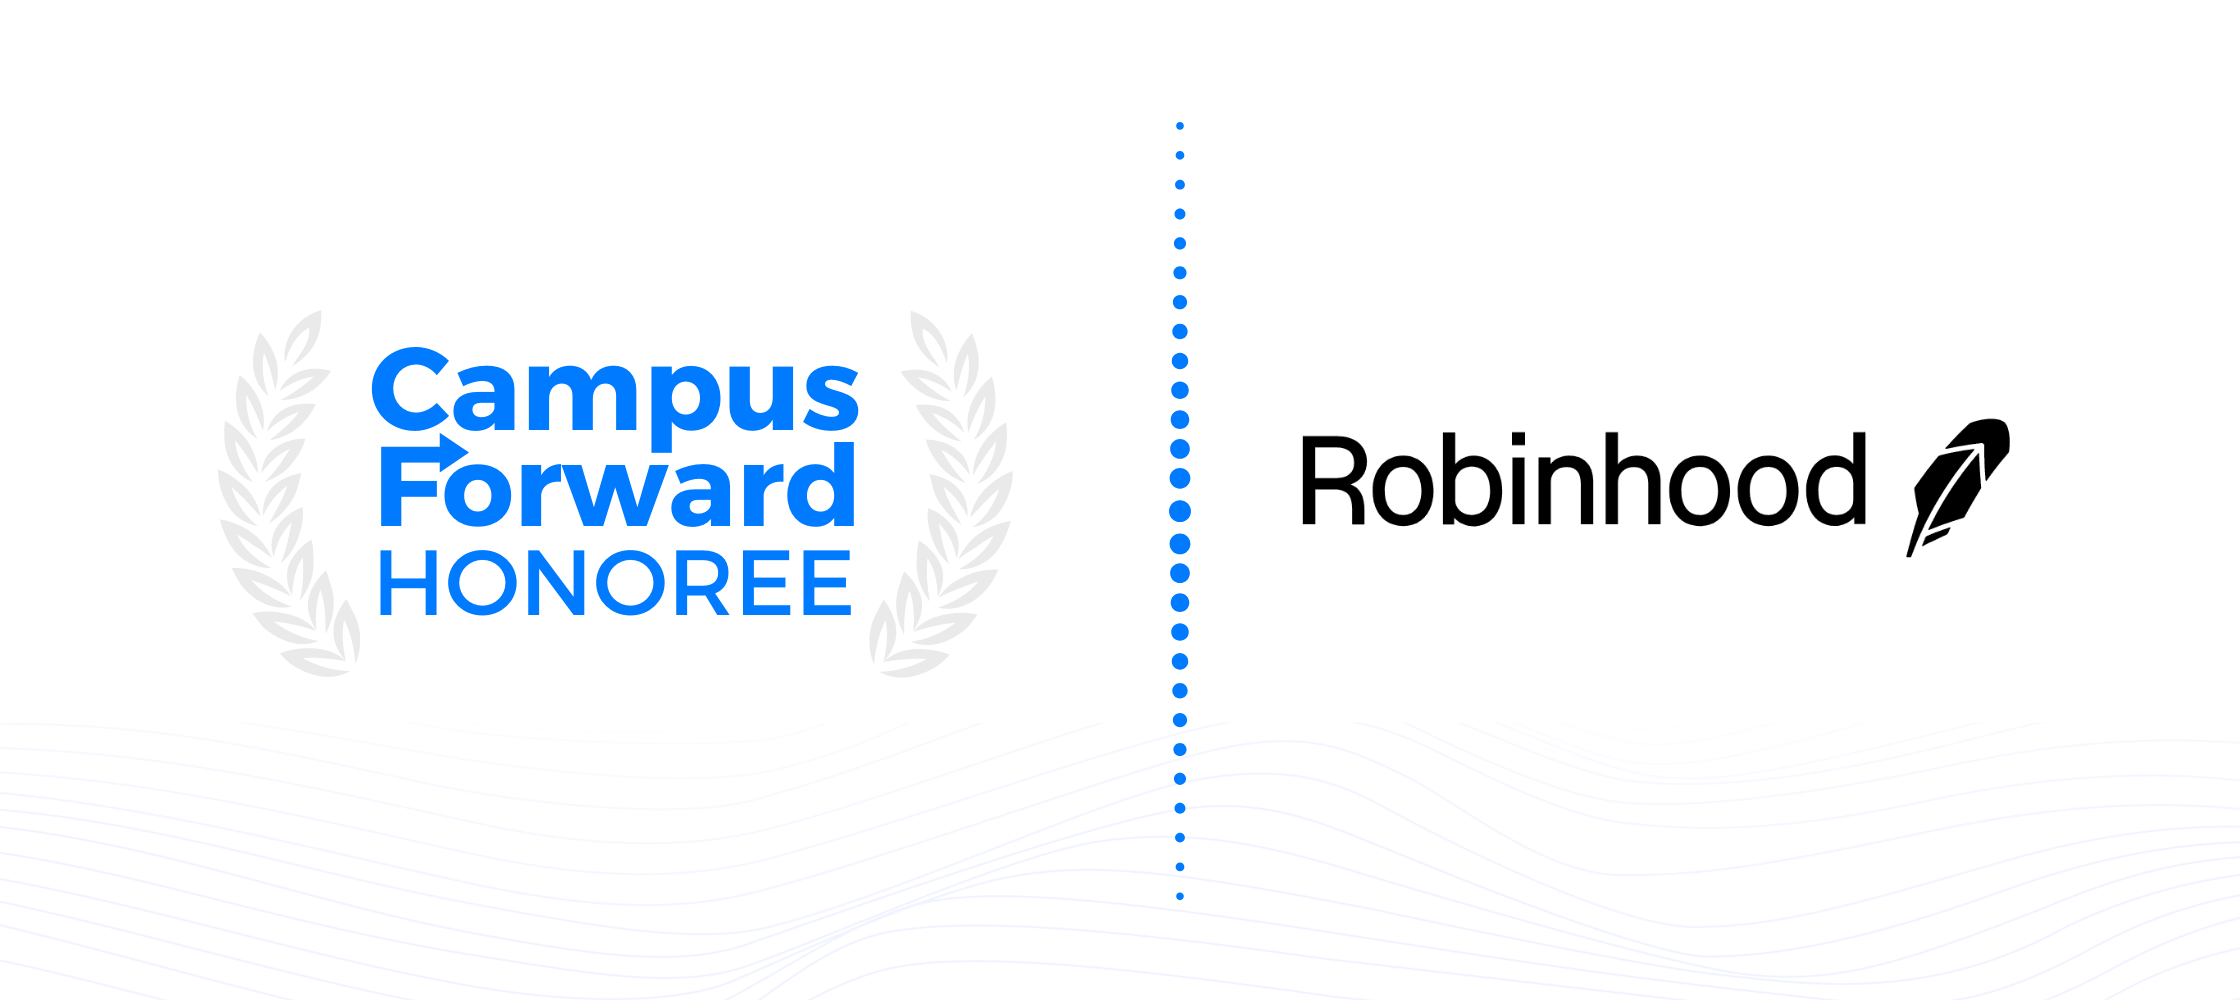 Campus Forward Honoree - Robinhood